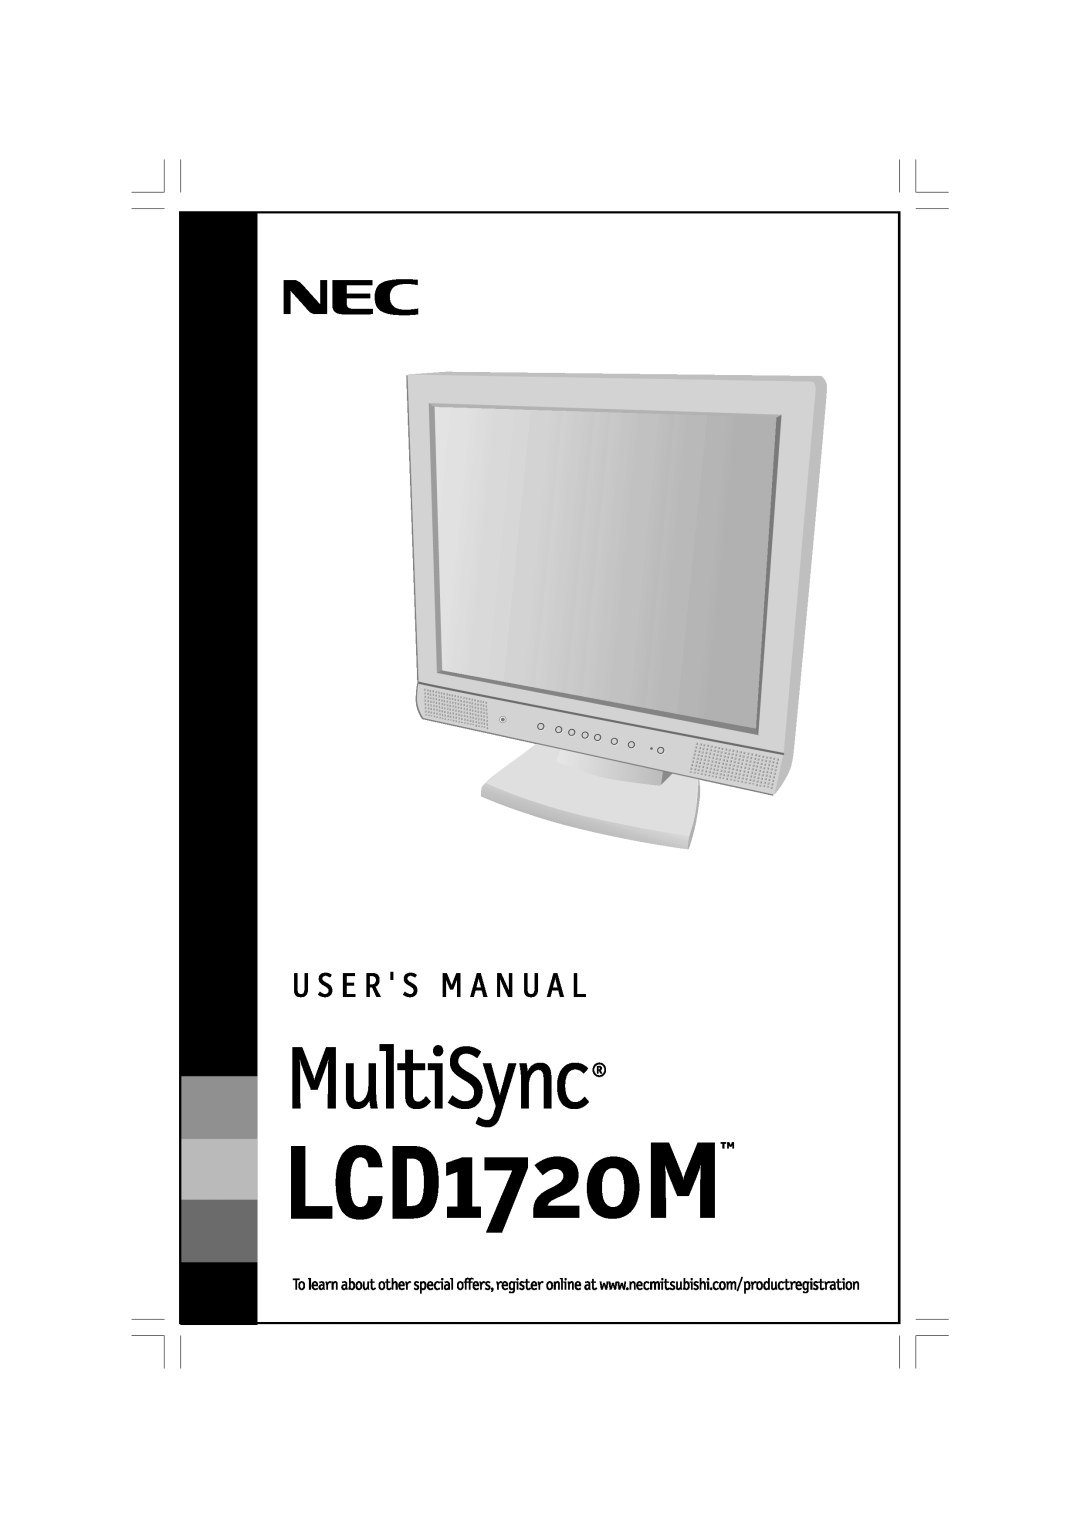 Mitsubishi Electronics LCD1720M manual 